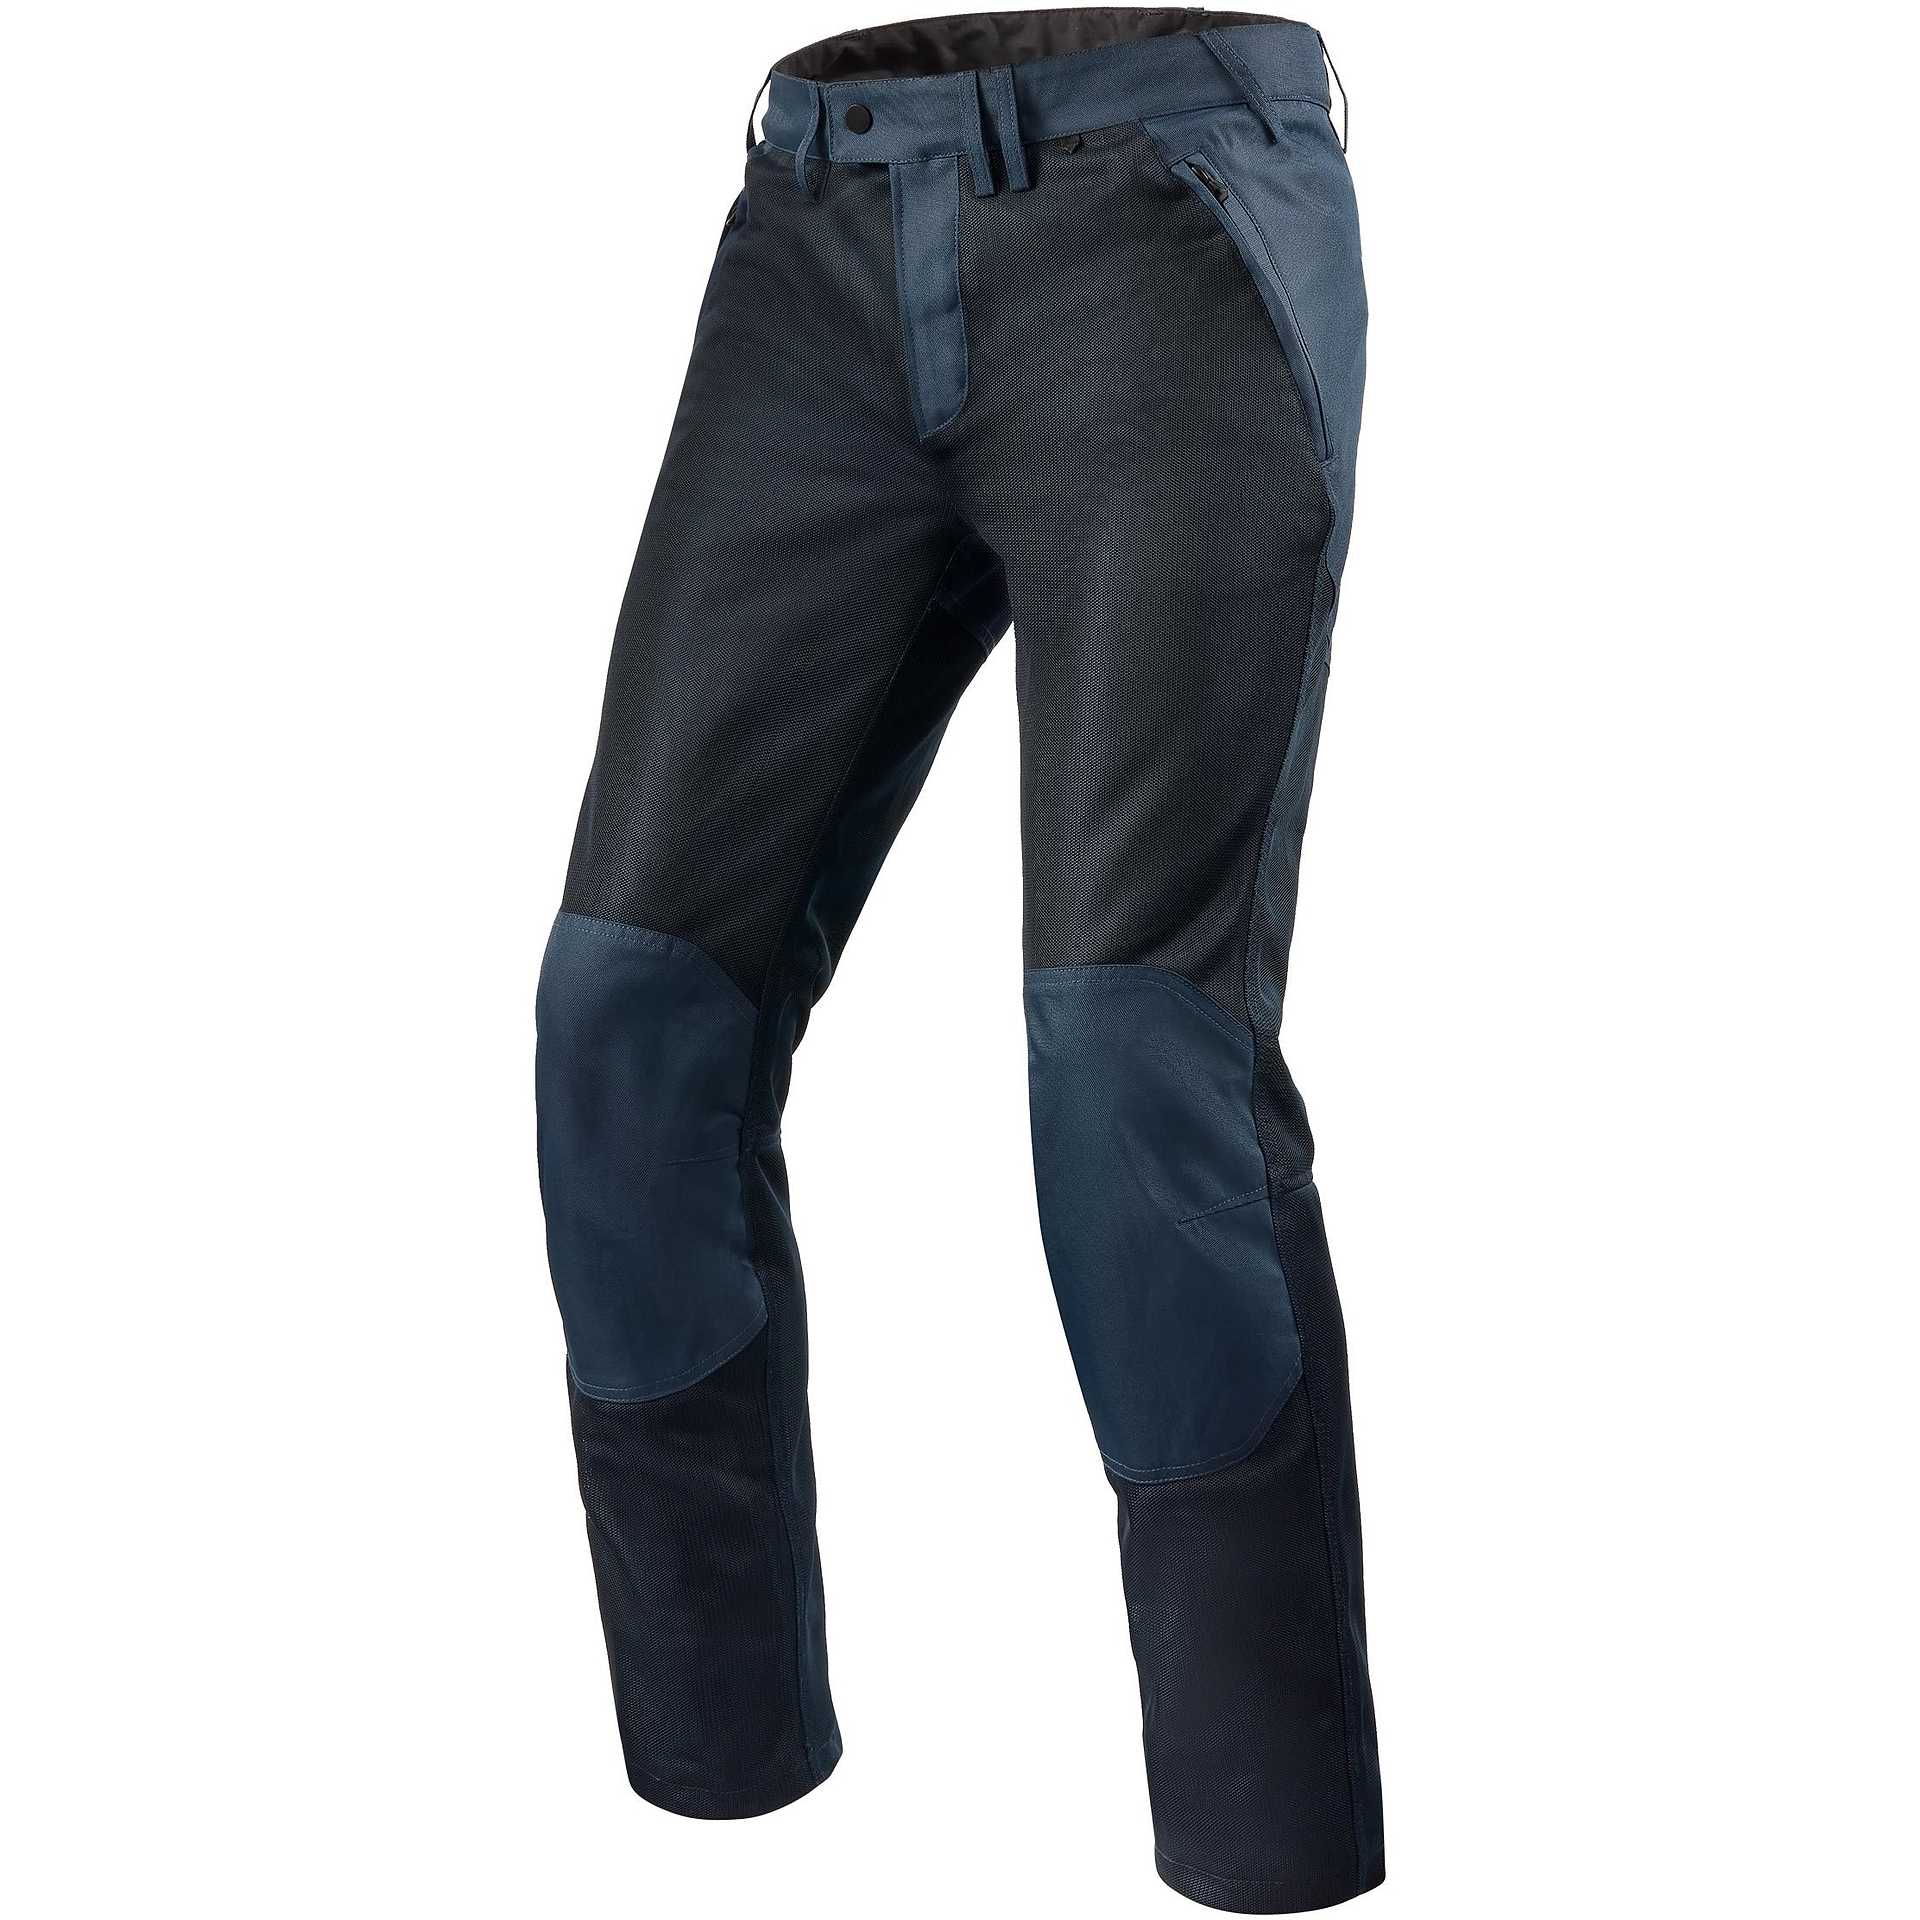 revit eclipse dark blue elongated summer motorcycle pants 143536 zoom